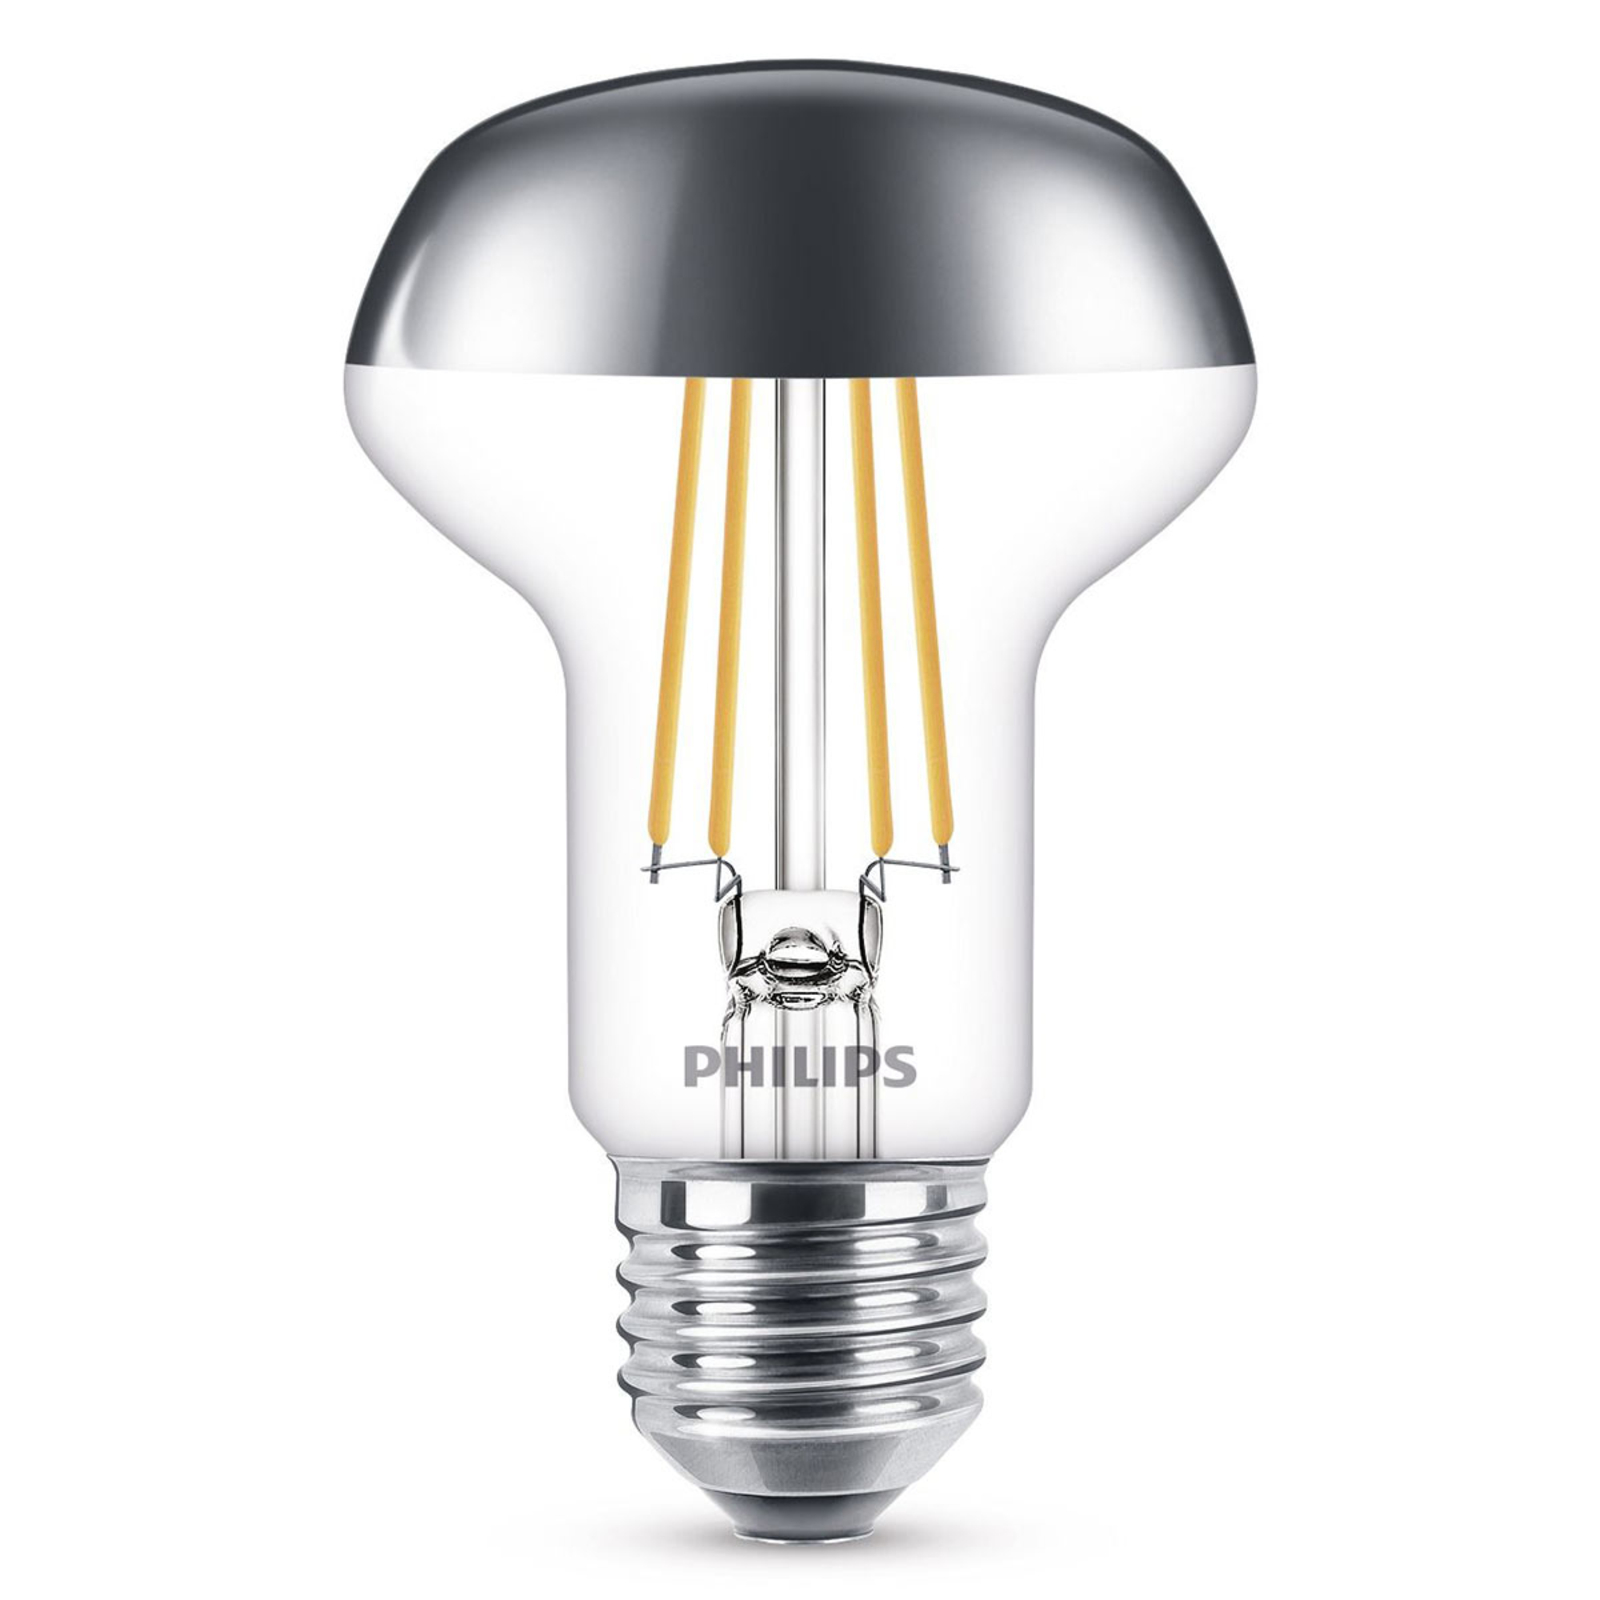 Volwassen Machtig beschaving Philips E27 R63 LED reflector bulb 827 4 W | Lights.co.uk